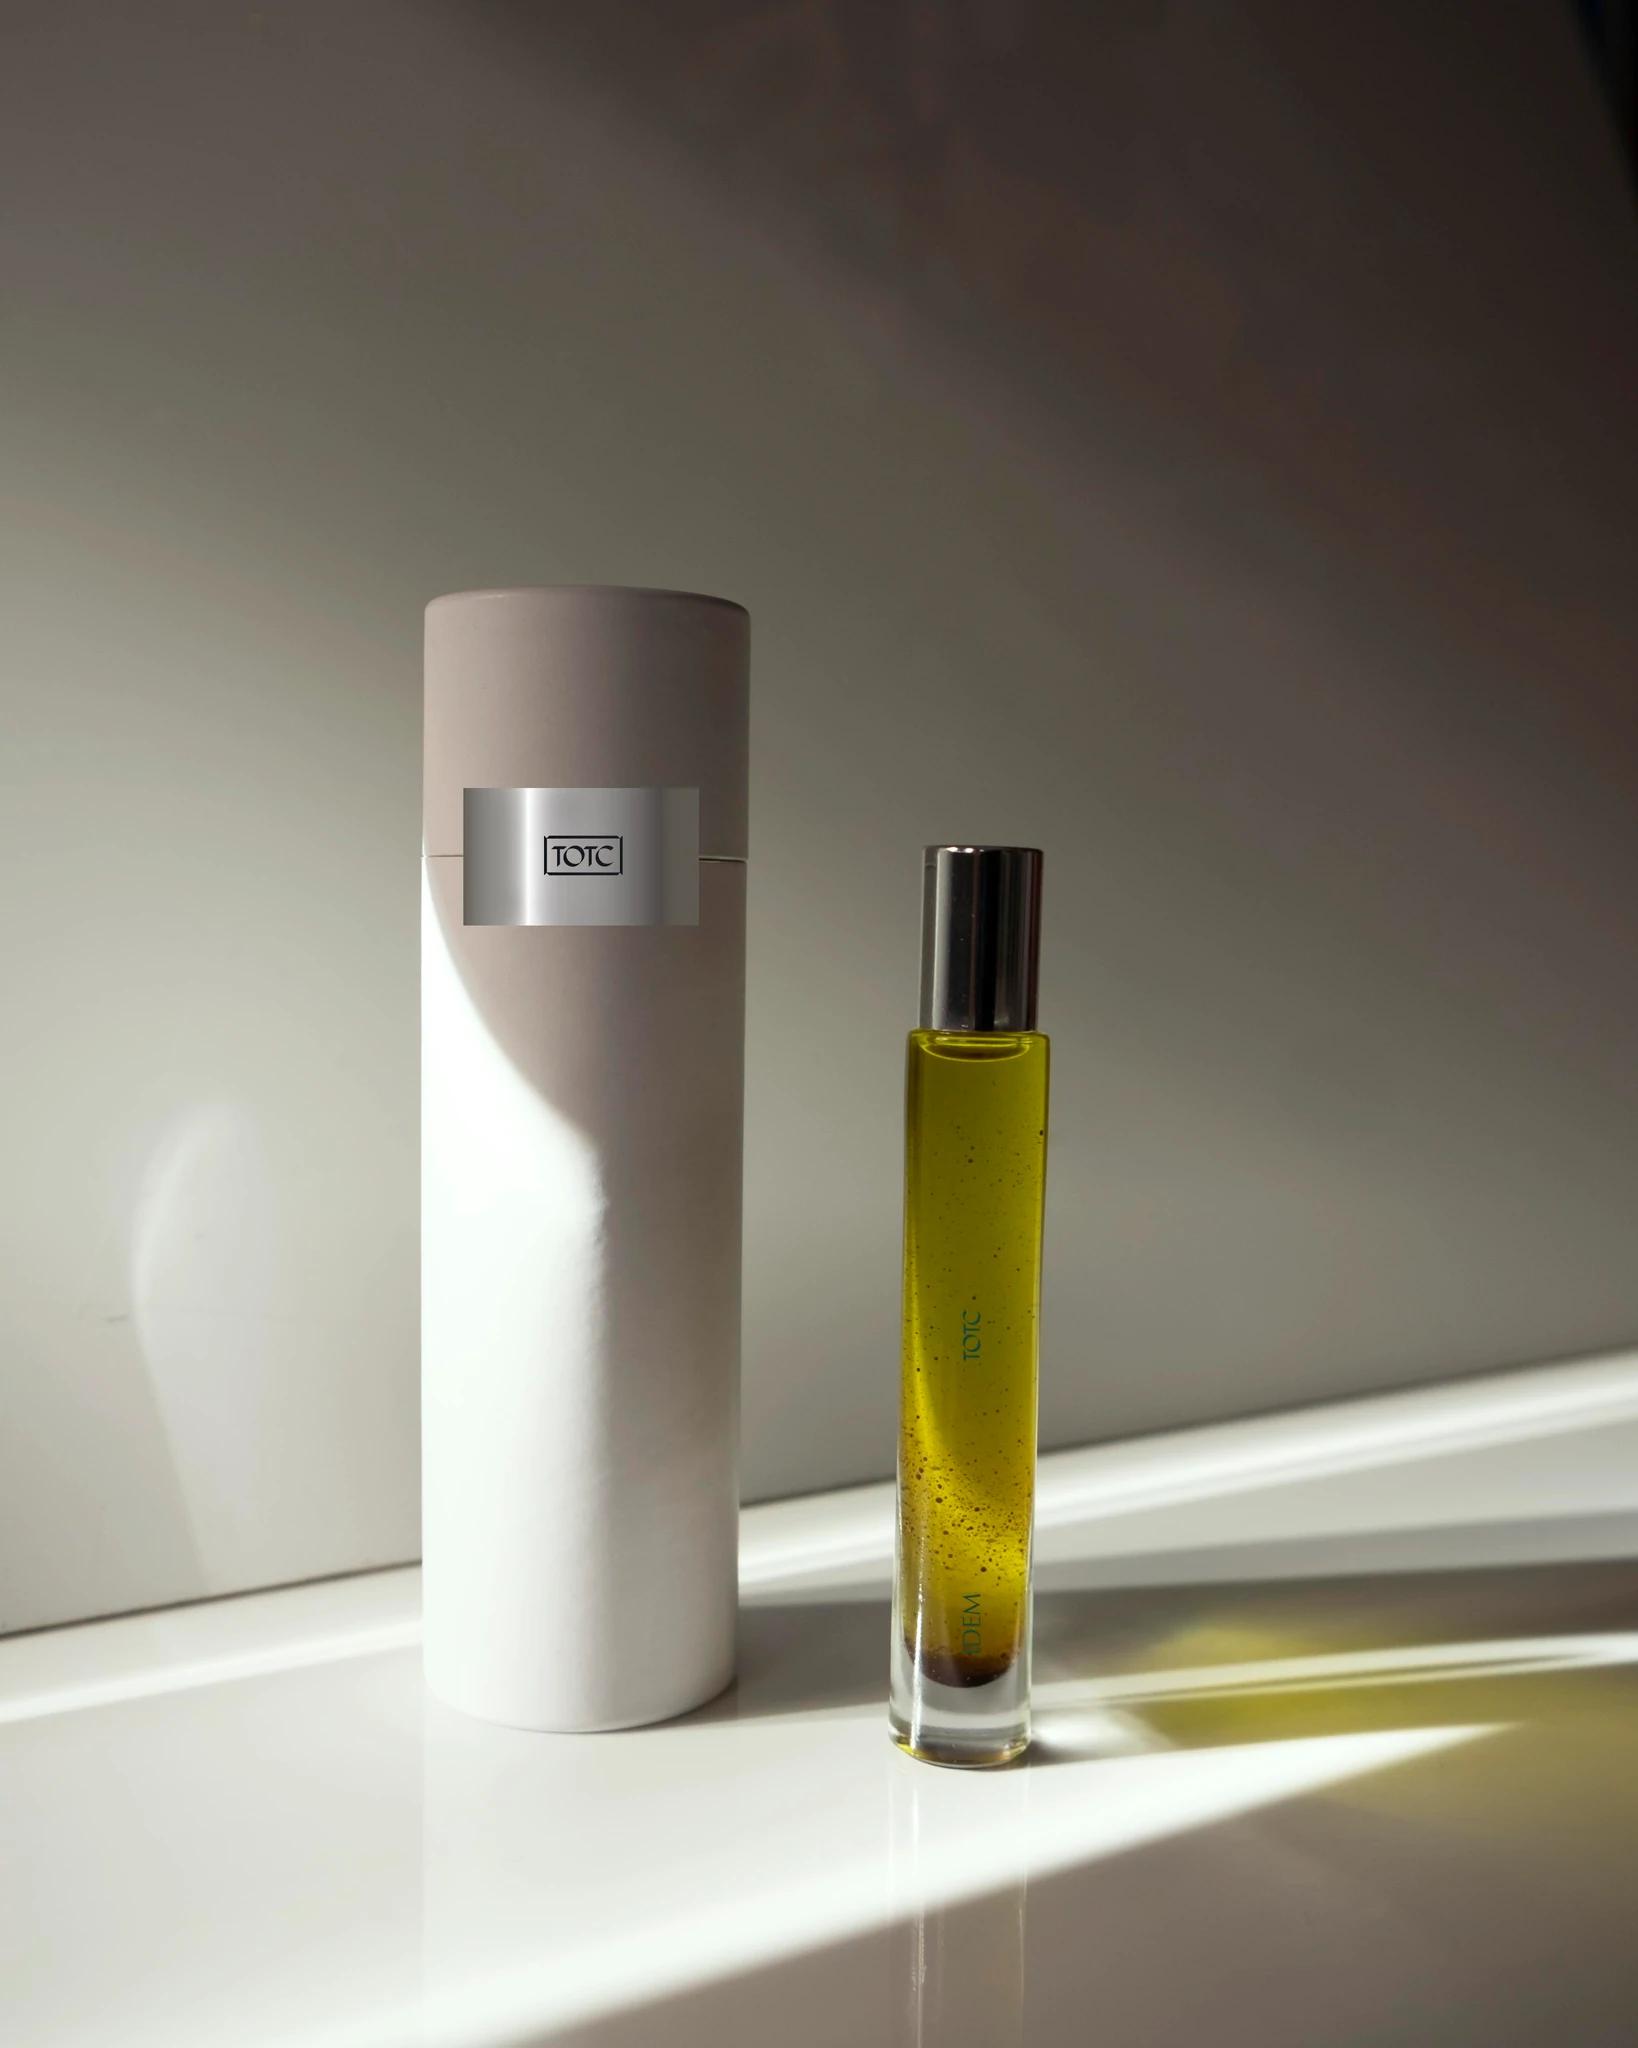 Product Image for Idem Pocket Perfume Roller